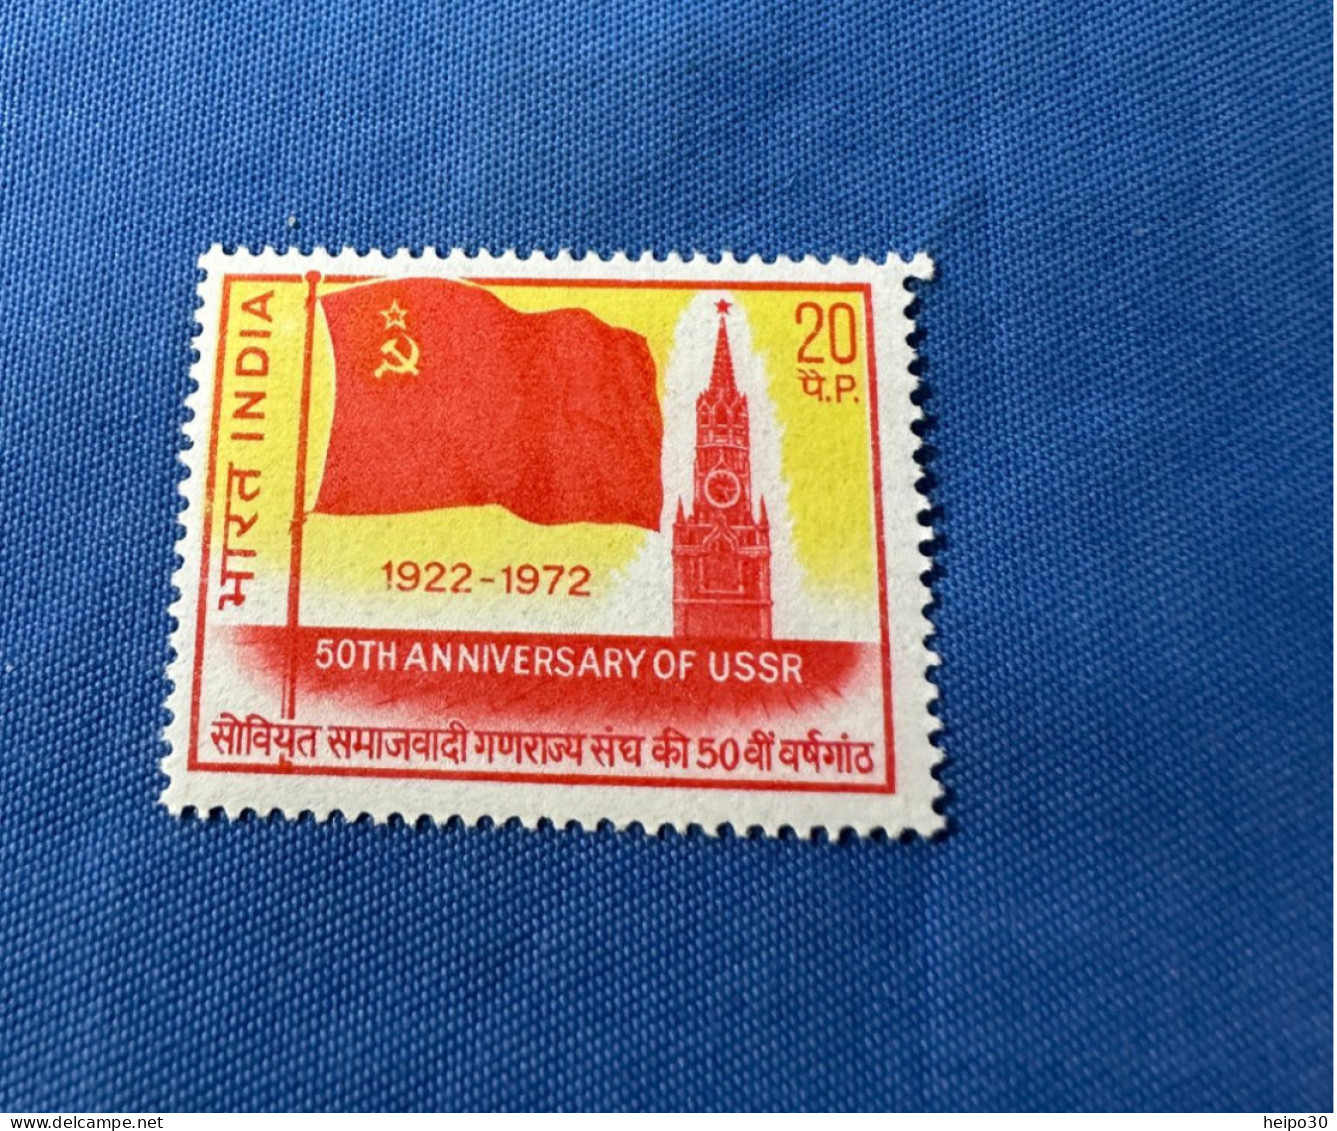 India 1972 Michel 551 UdSSR 50 Jahre MNH - Nuovi